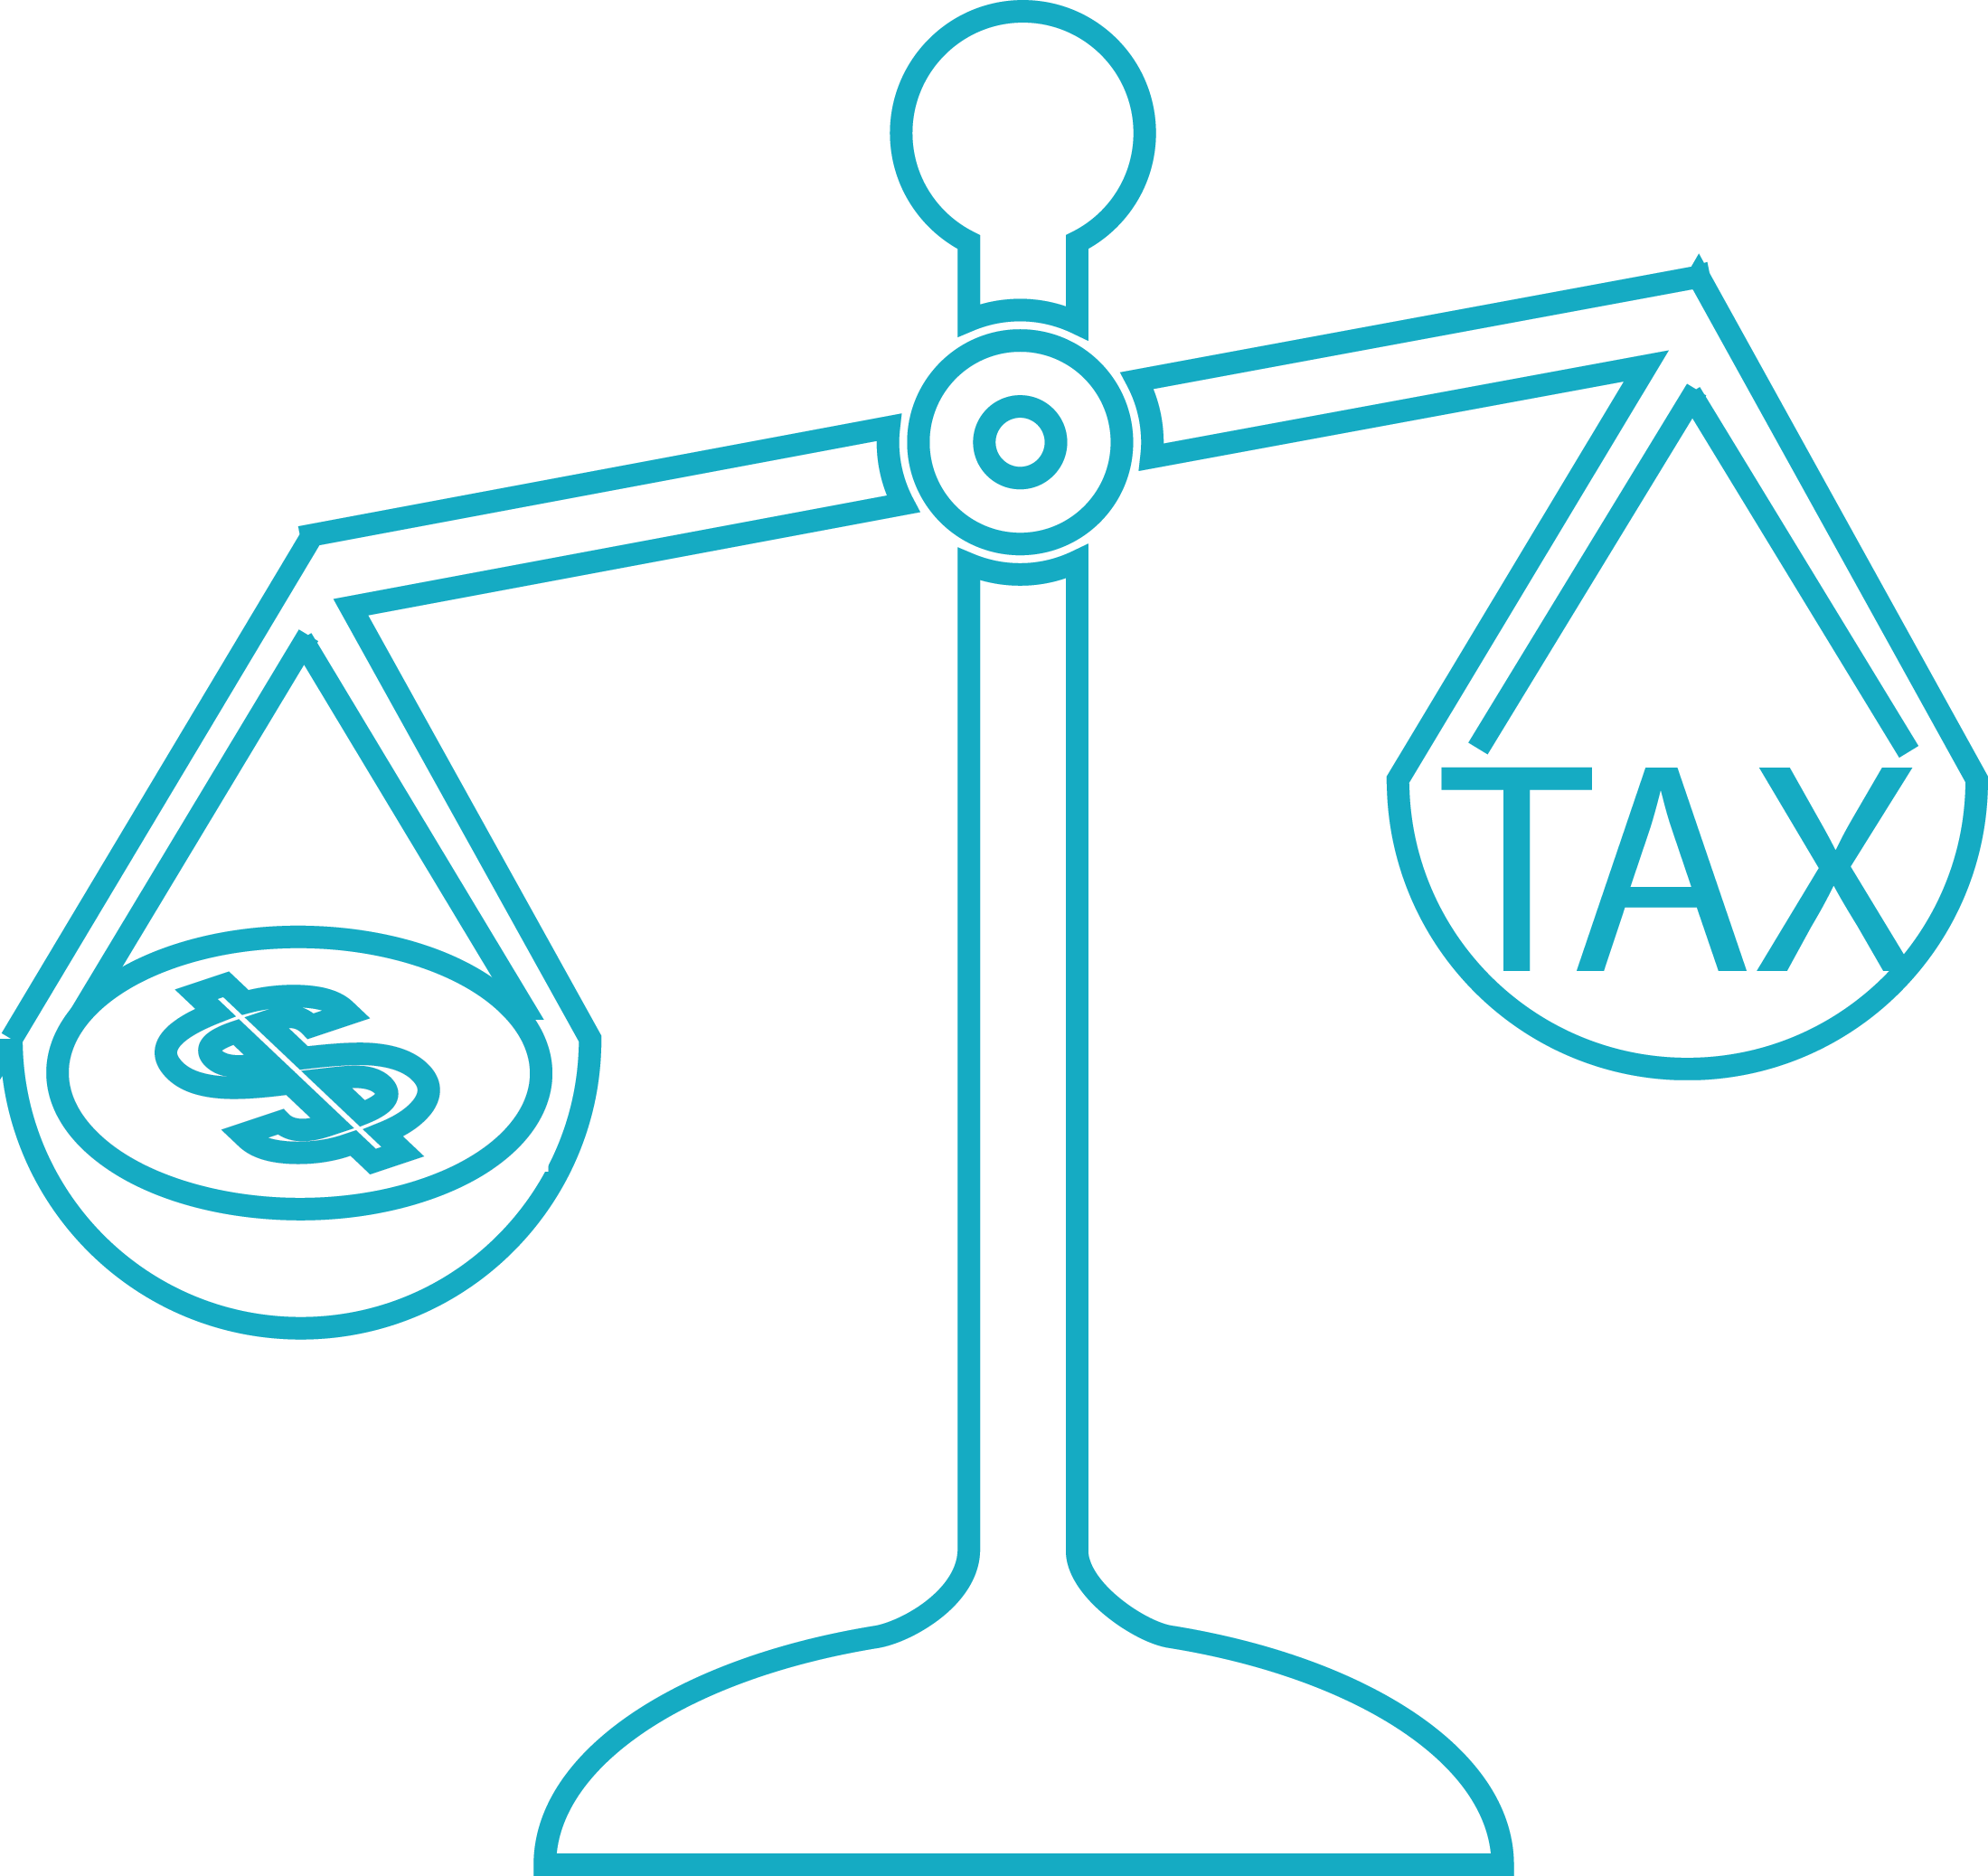 Accounting & Tax - Accounting (2199x2075)